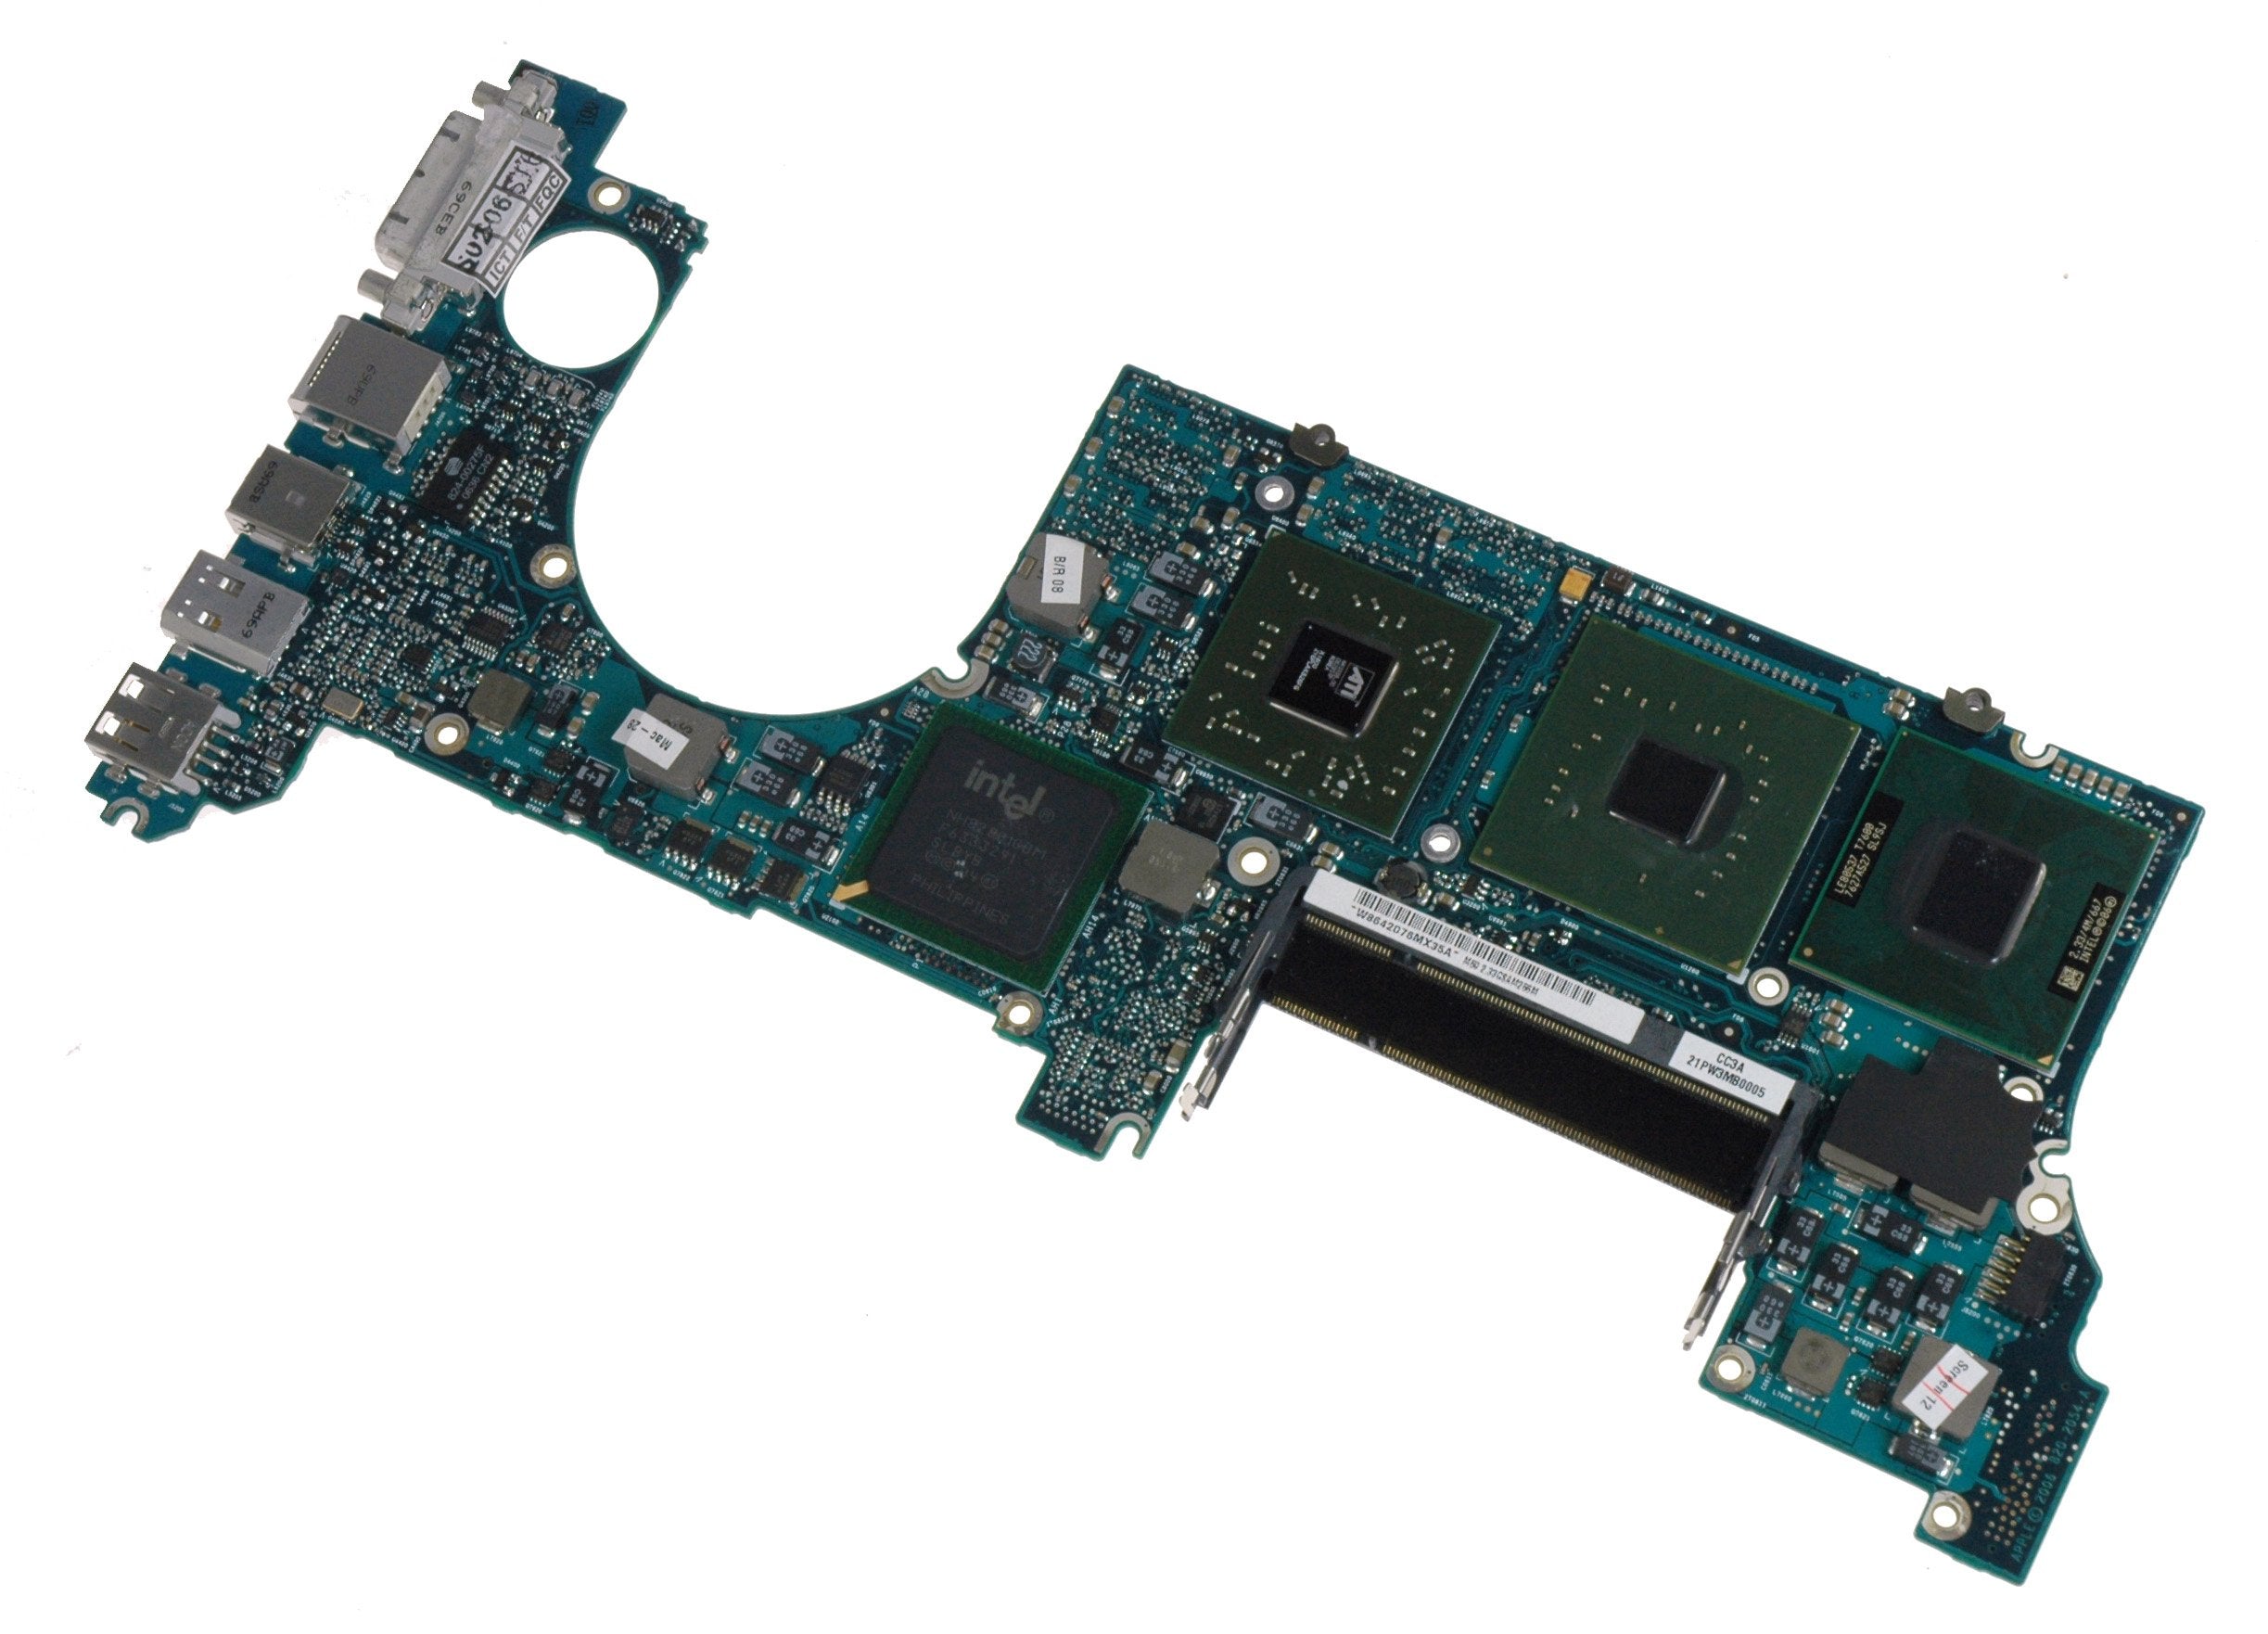 MacBook Pro 15" (Model A1211) 2.33 GHz Logic Board